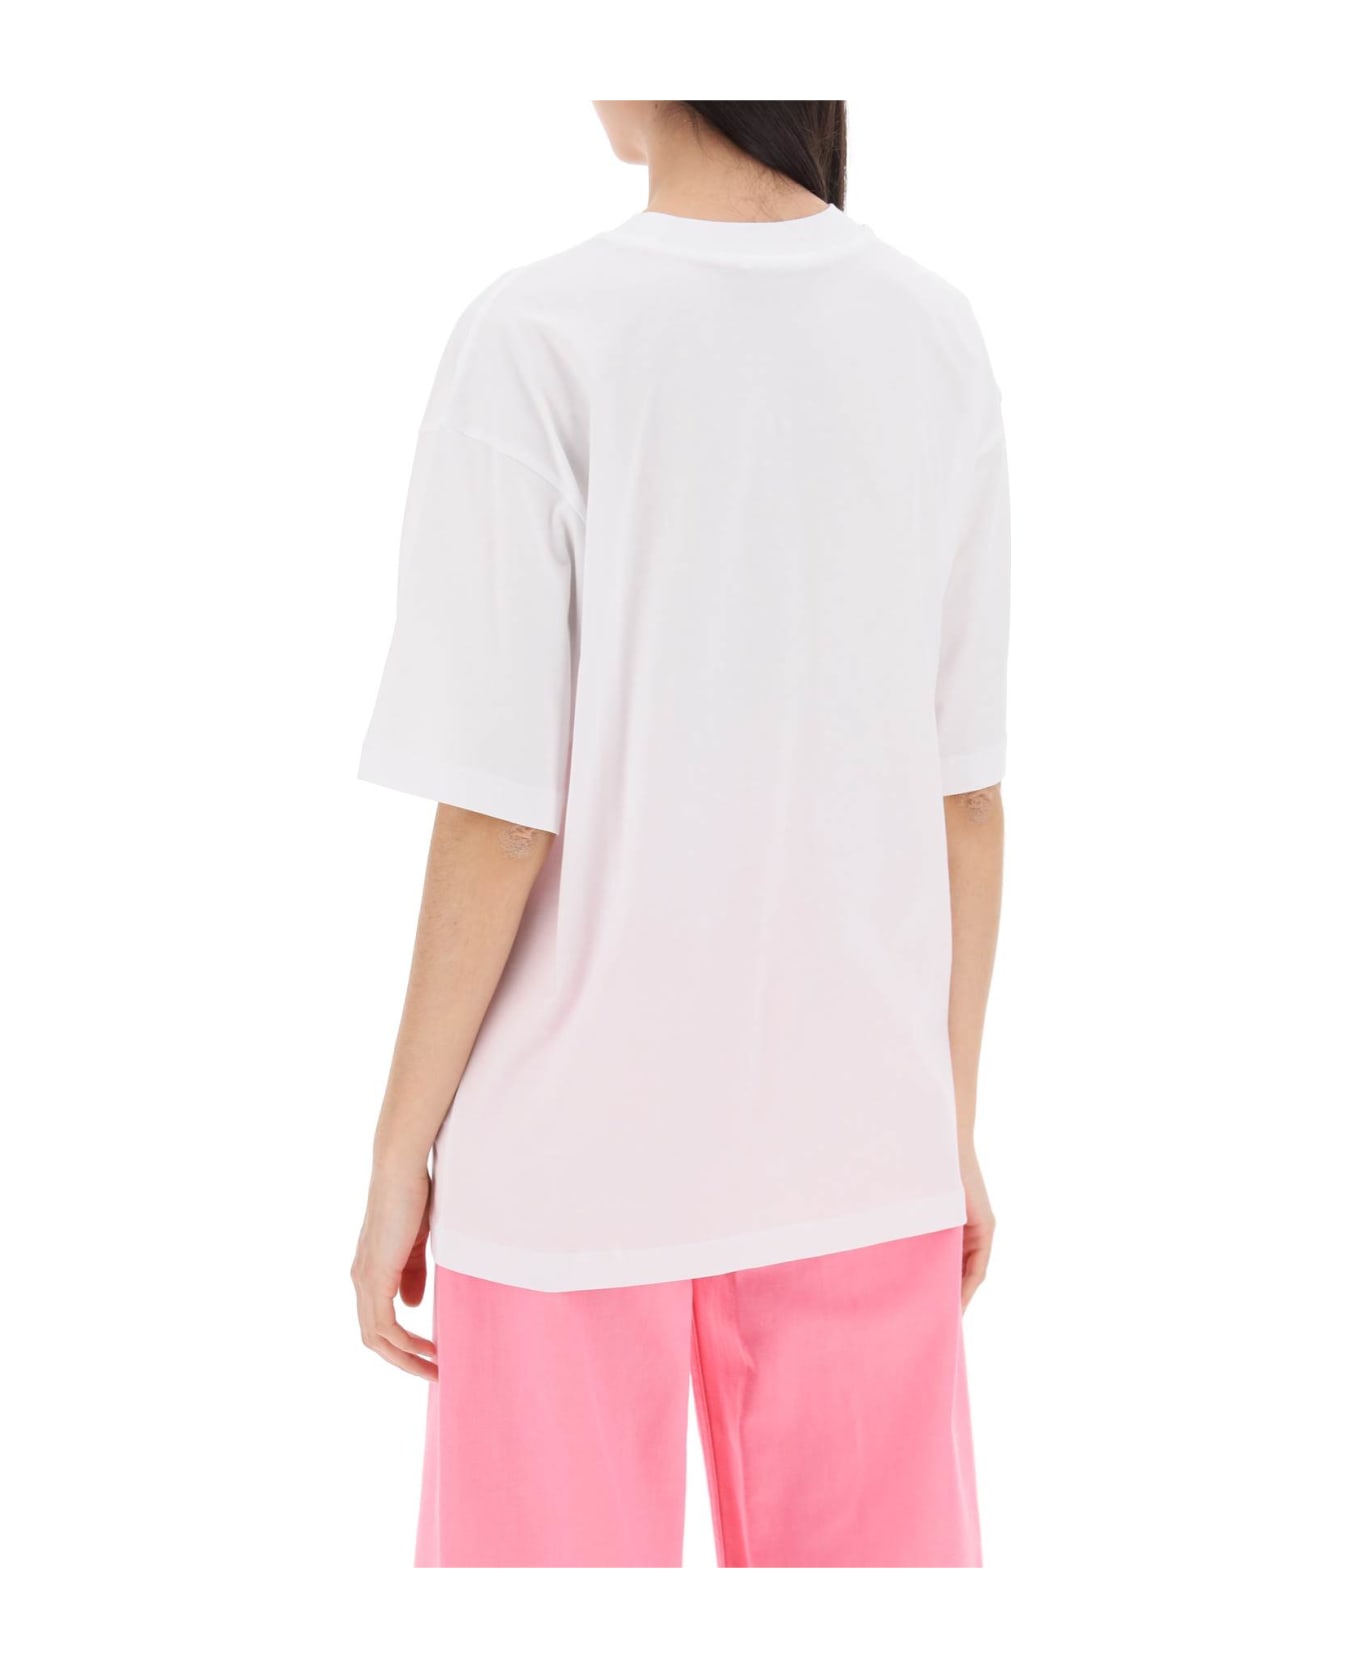 Marni T-shirt With Maxi Logo Print - Bianco/rosa Tシャツ